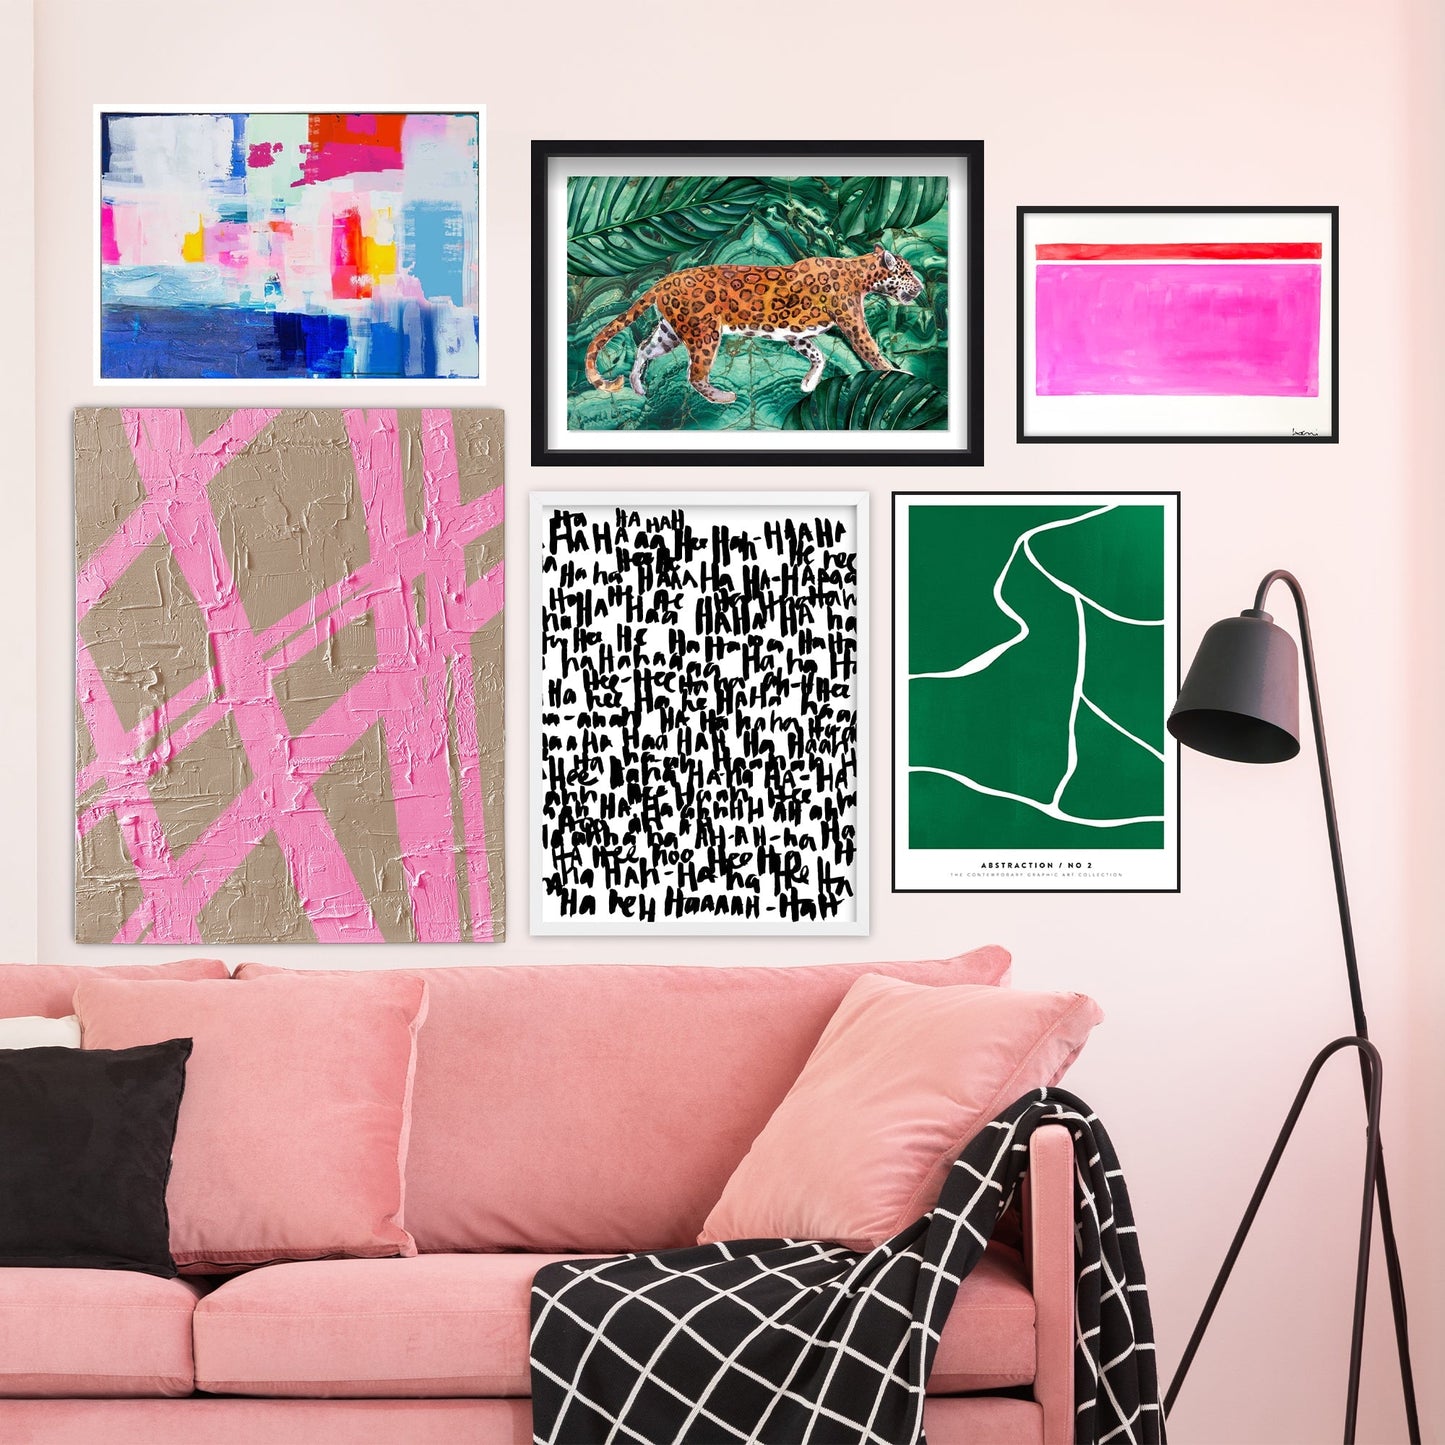 Abstract Pink + Tan Lines Textured Art TEXTURED ART LULUSIMONSTUDIO 